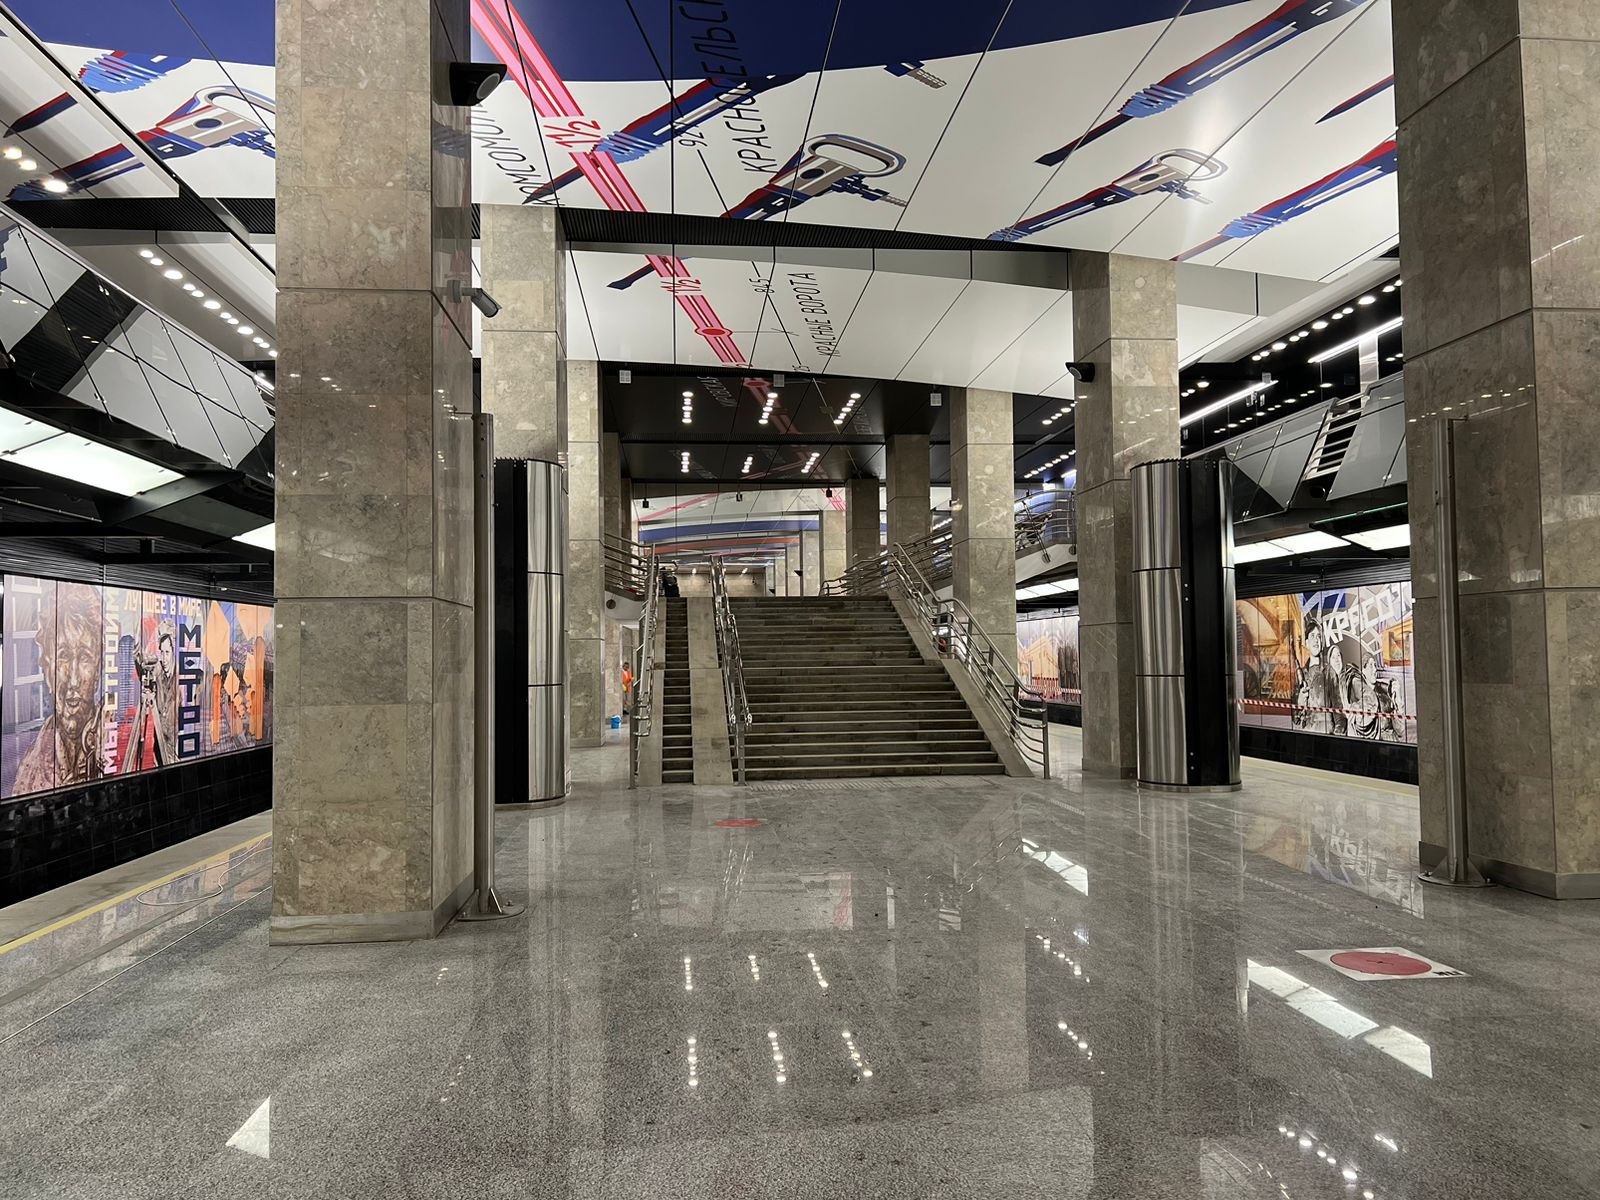 Metro station “Stromynka” of the Big Circle Line